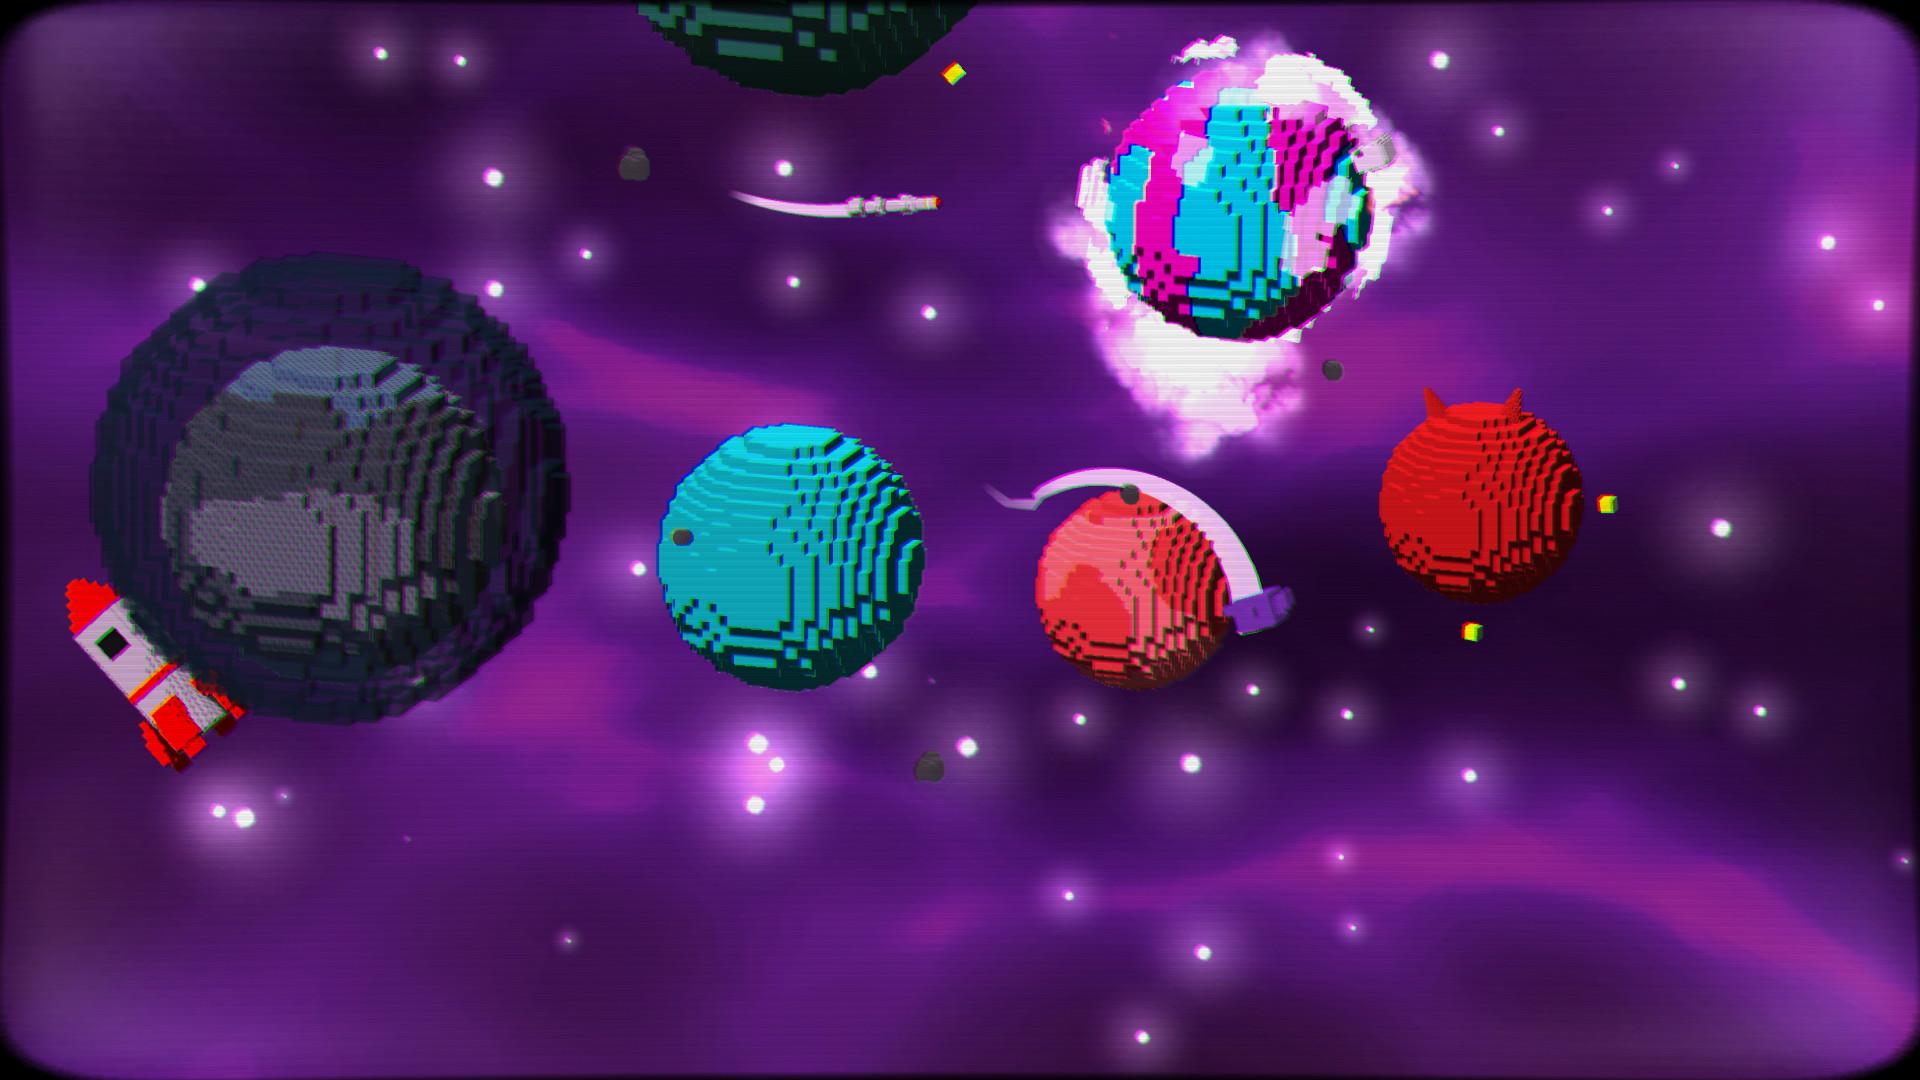 Screenshot №12 from game Cosmic Leap